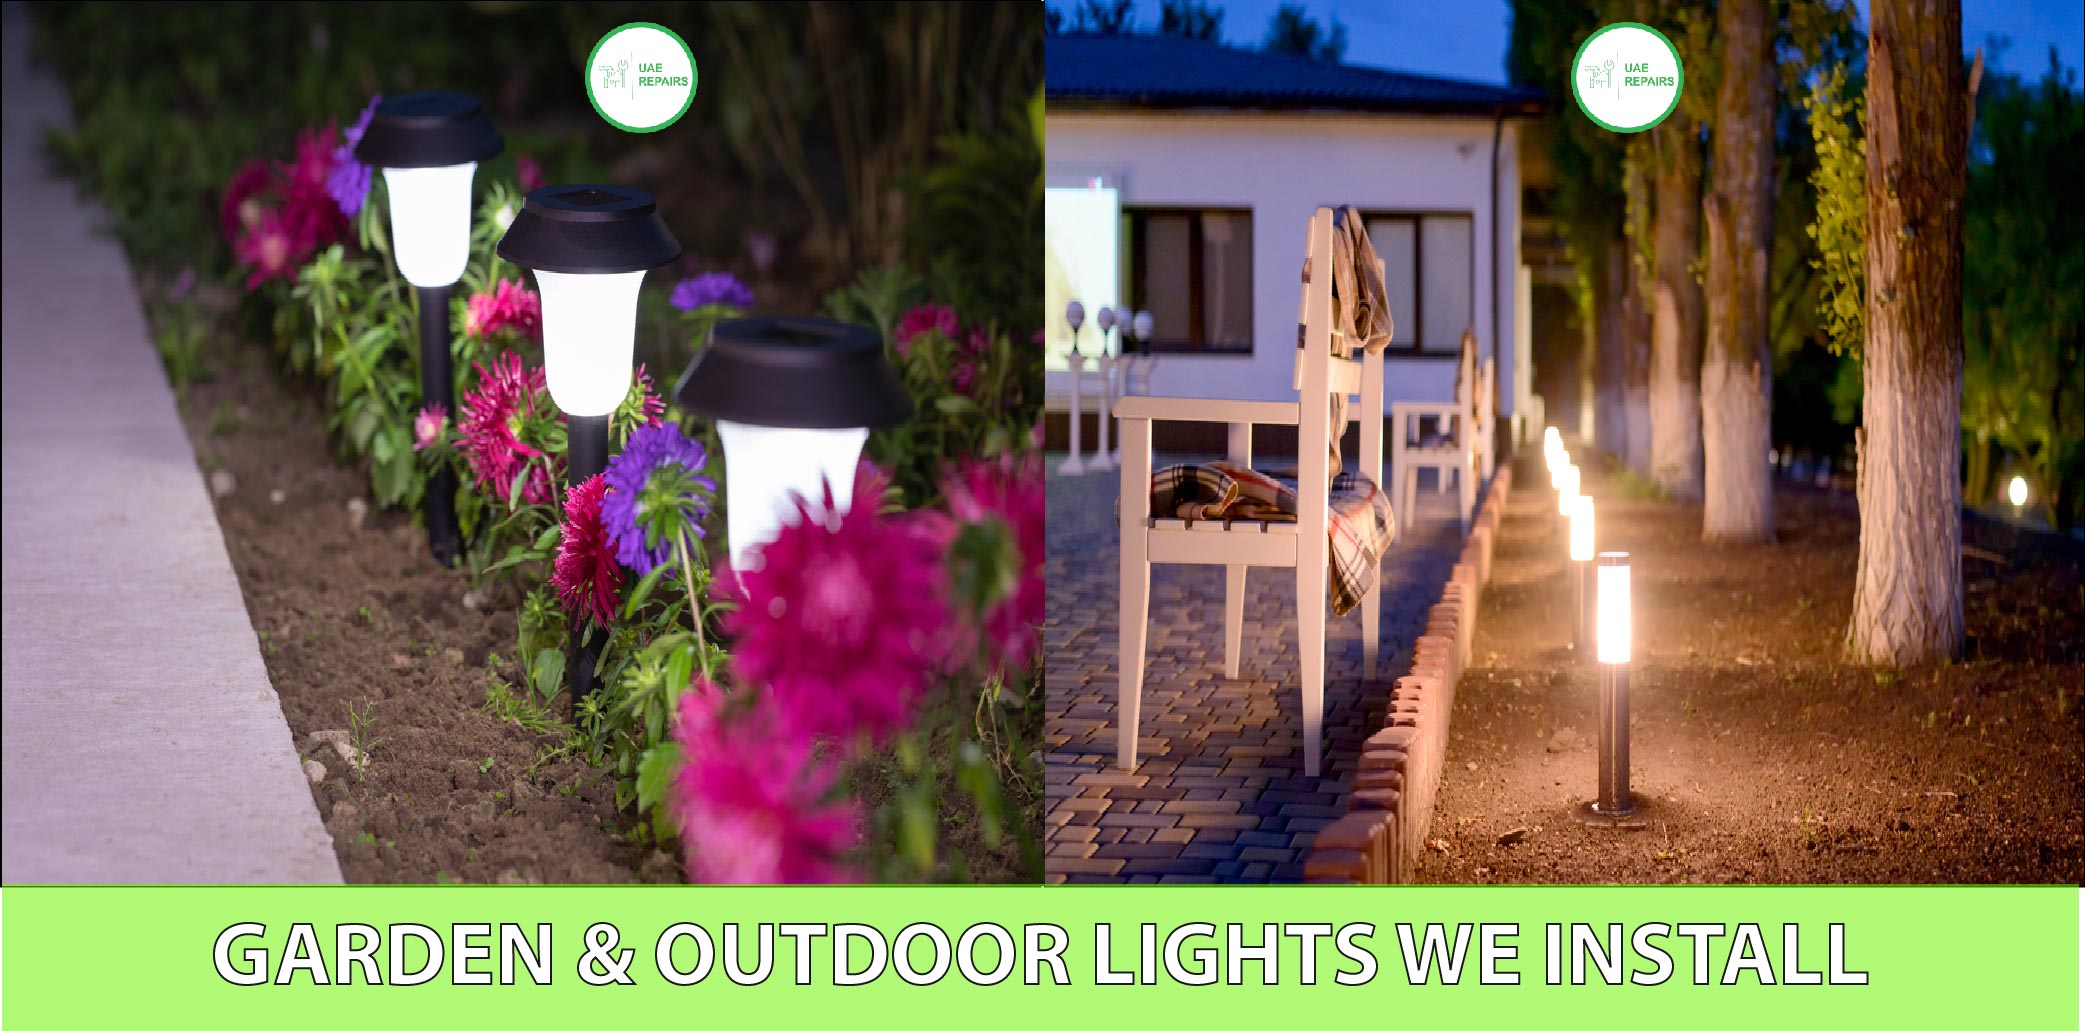 UAE REPAIRS Garden and Outdoor Lights We Install